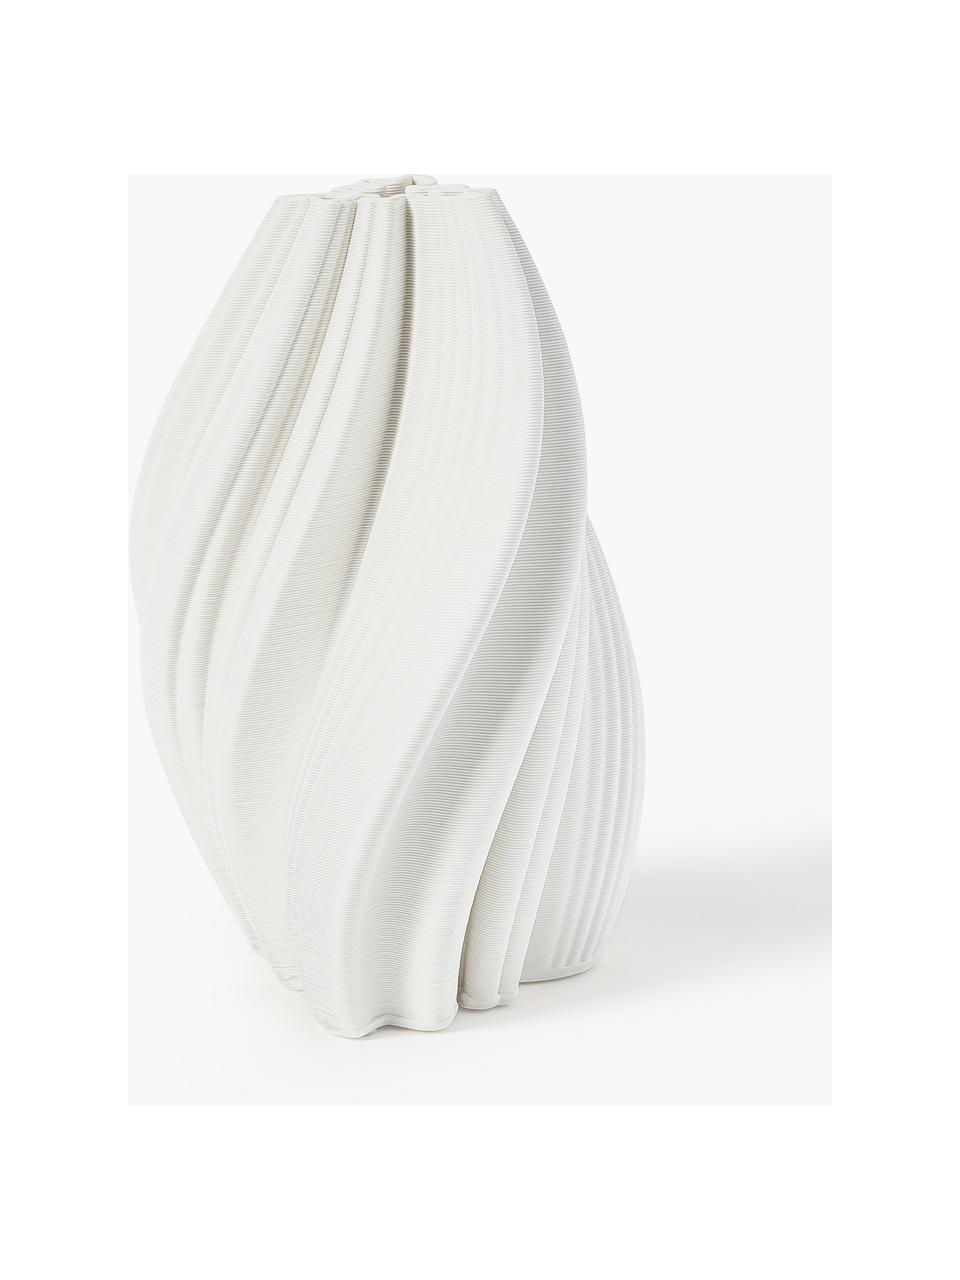 3D gedruckte Vase Melody aus Porzellan, H 29 cm, Porzellan, Weiss, Ø 18 x H 29 cm